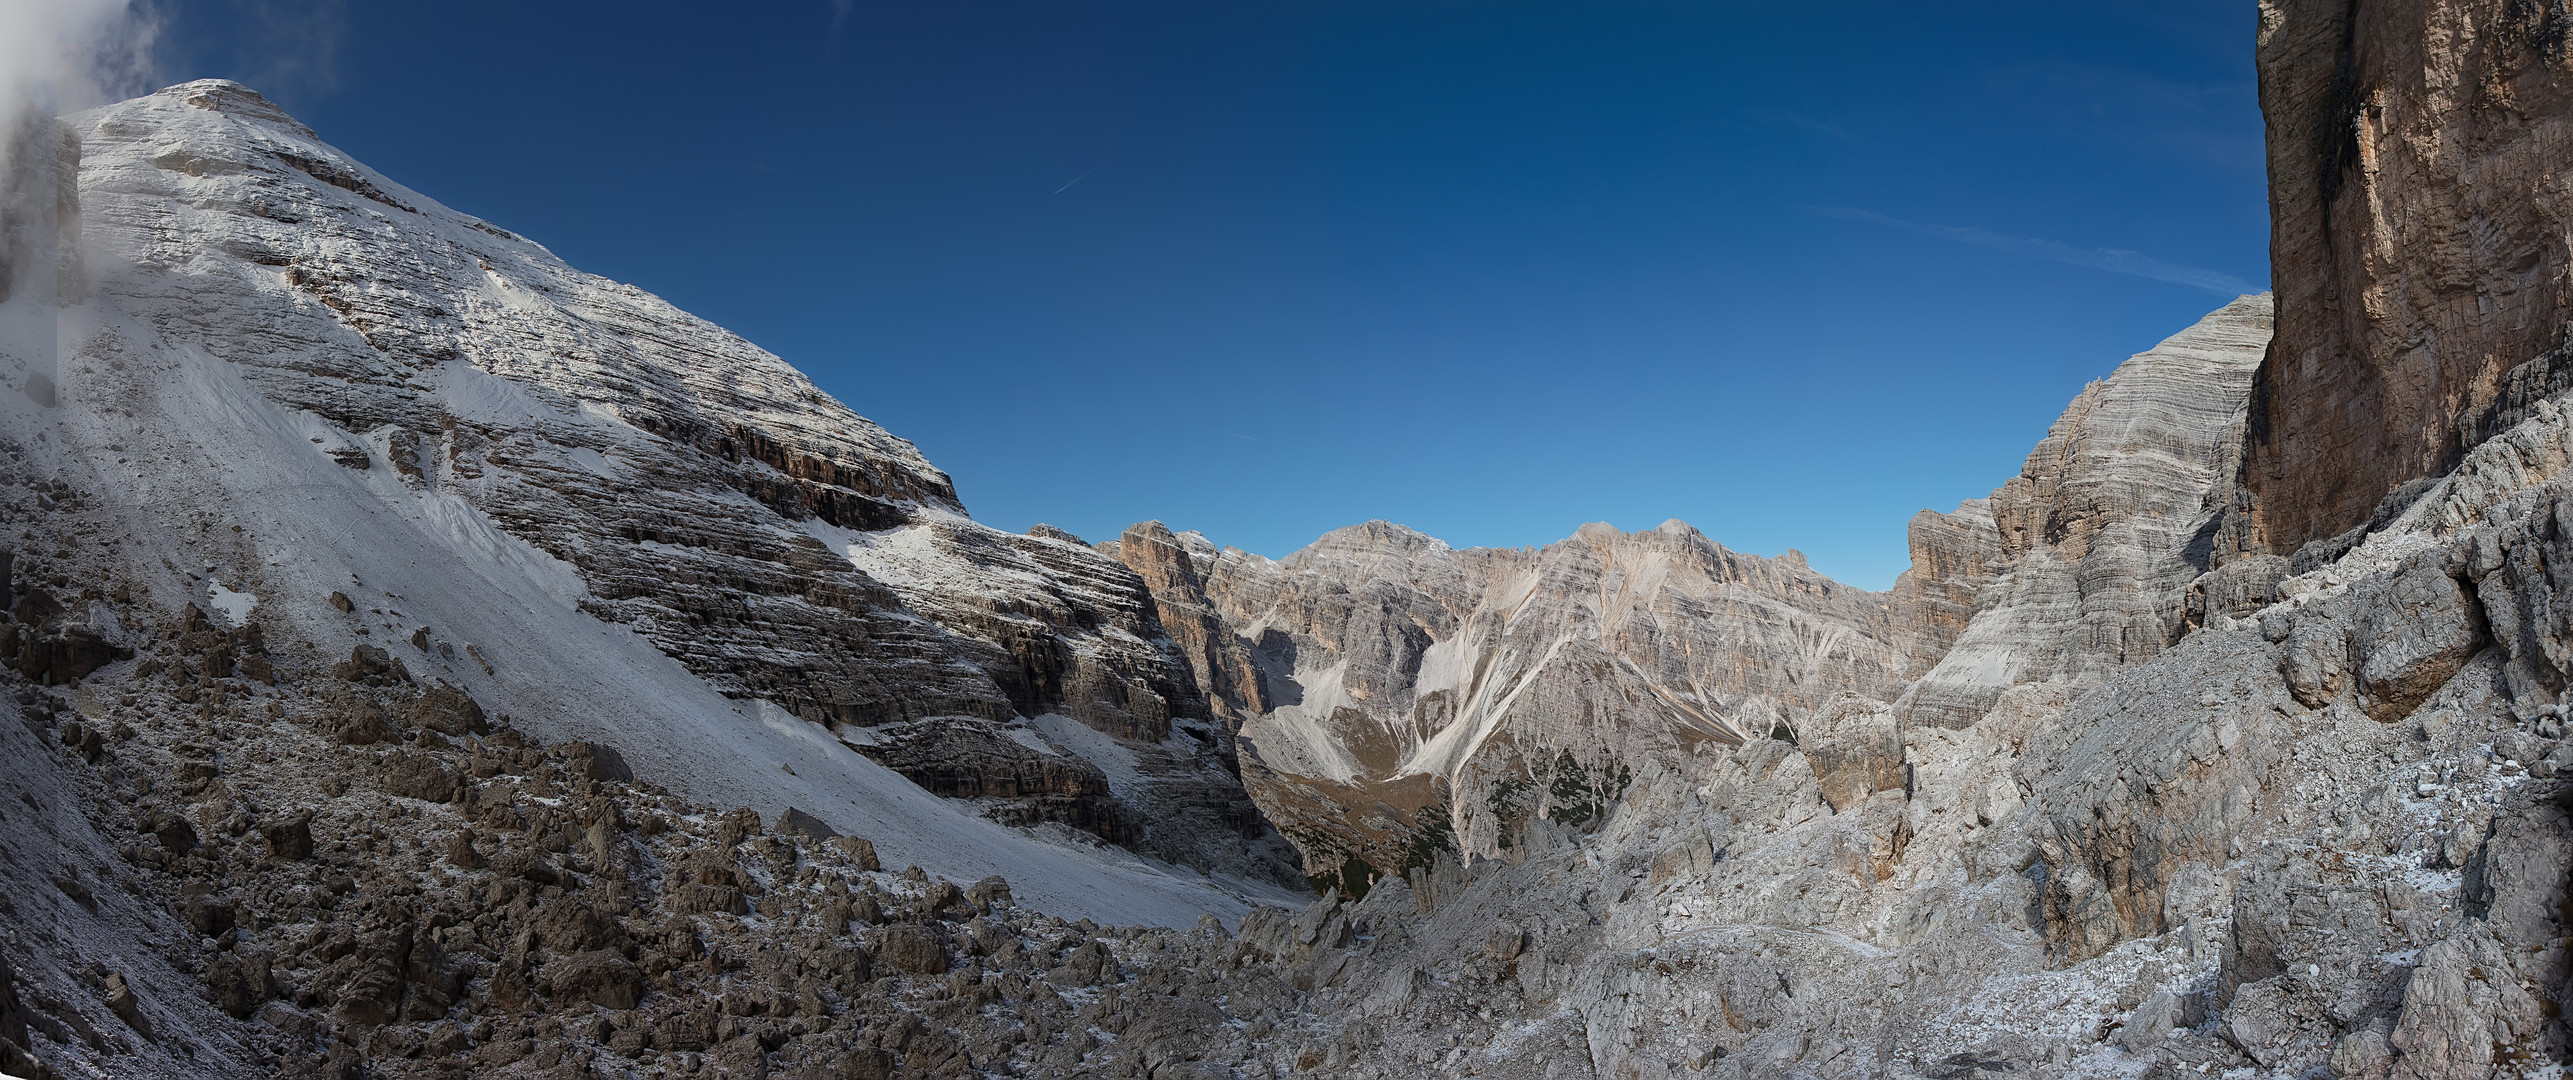 Regional Natural Park of the Ampezzo Dolomites #1